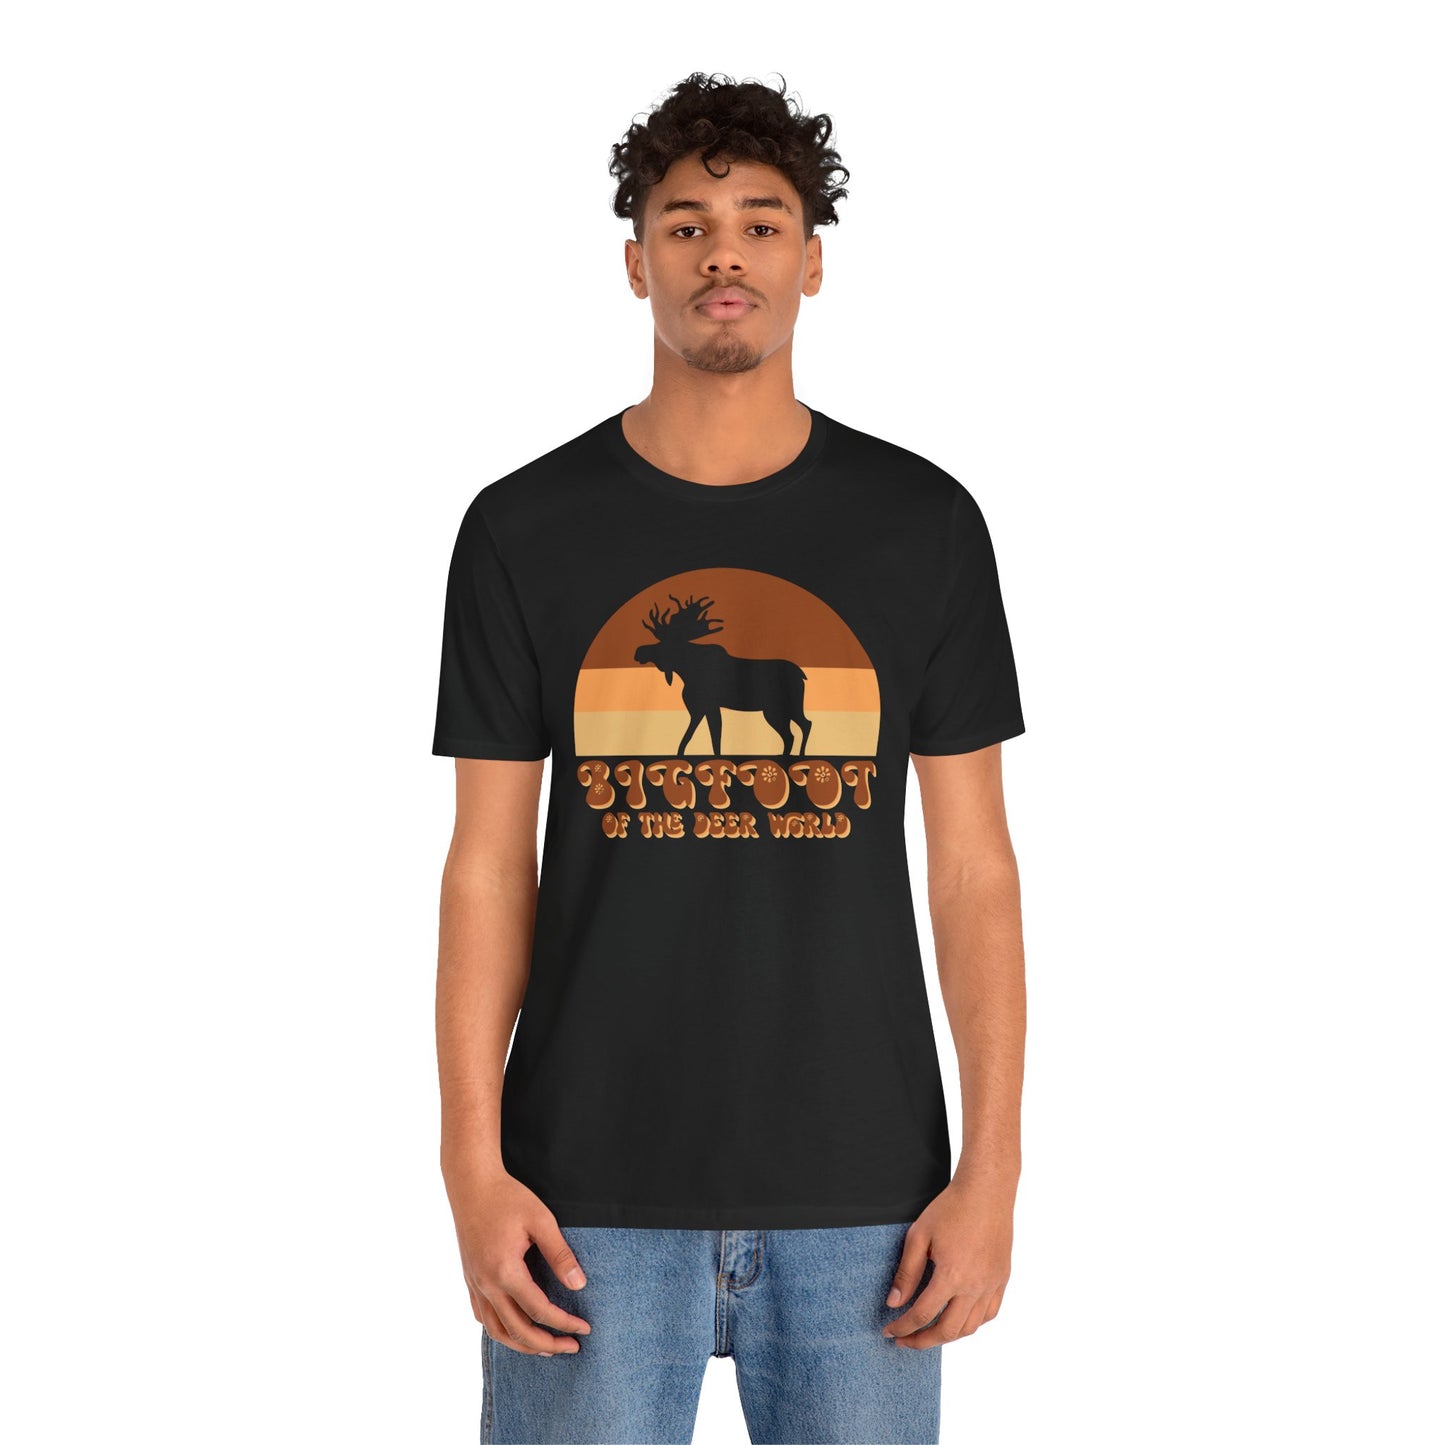 "Moose: Bigfoot of the Deer World" T-Shirt